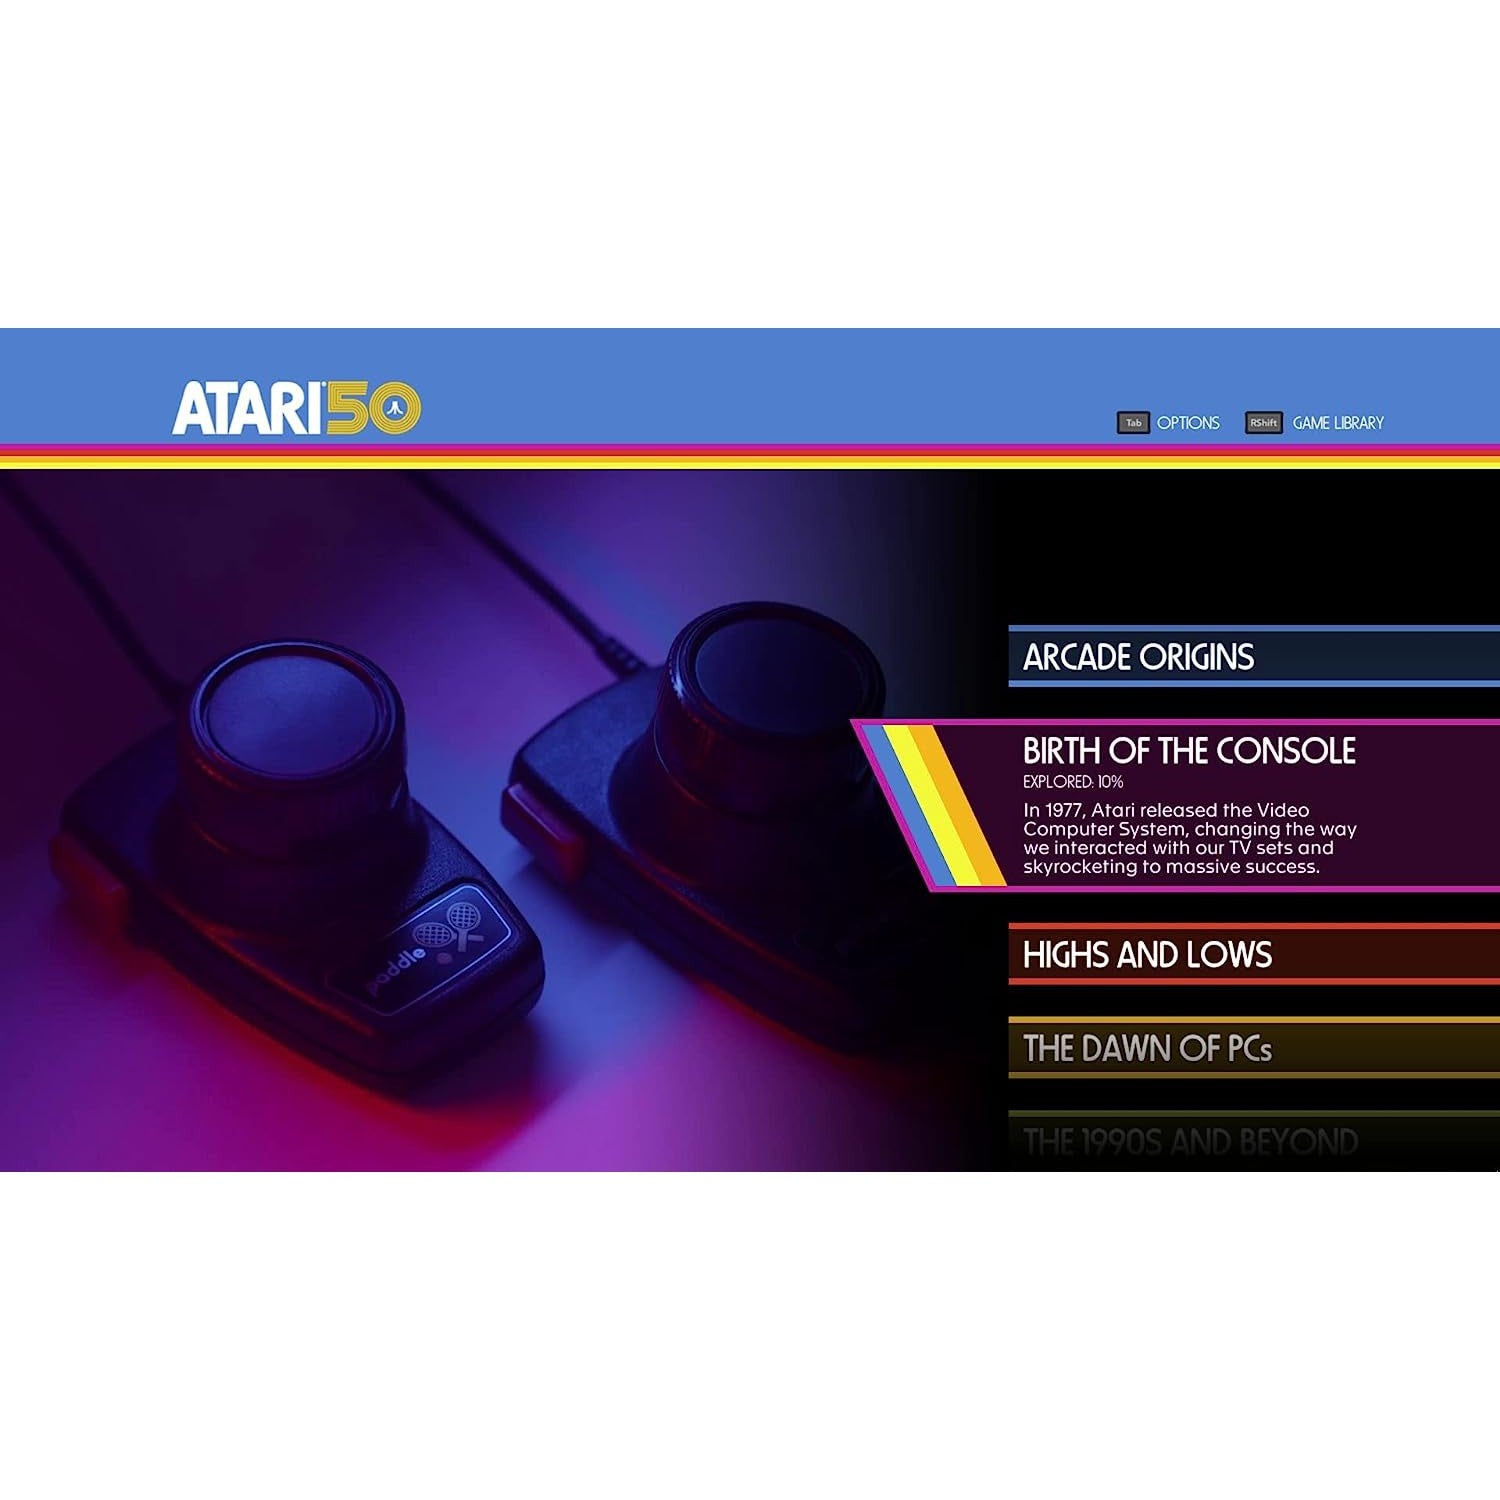 Atari 50: The Anniversary Celebration (PS5)